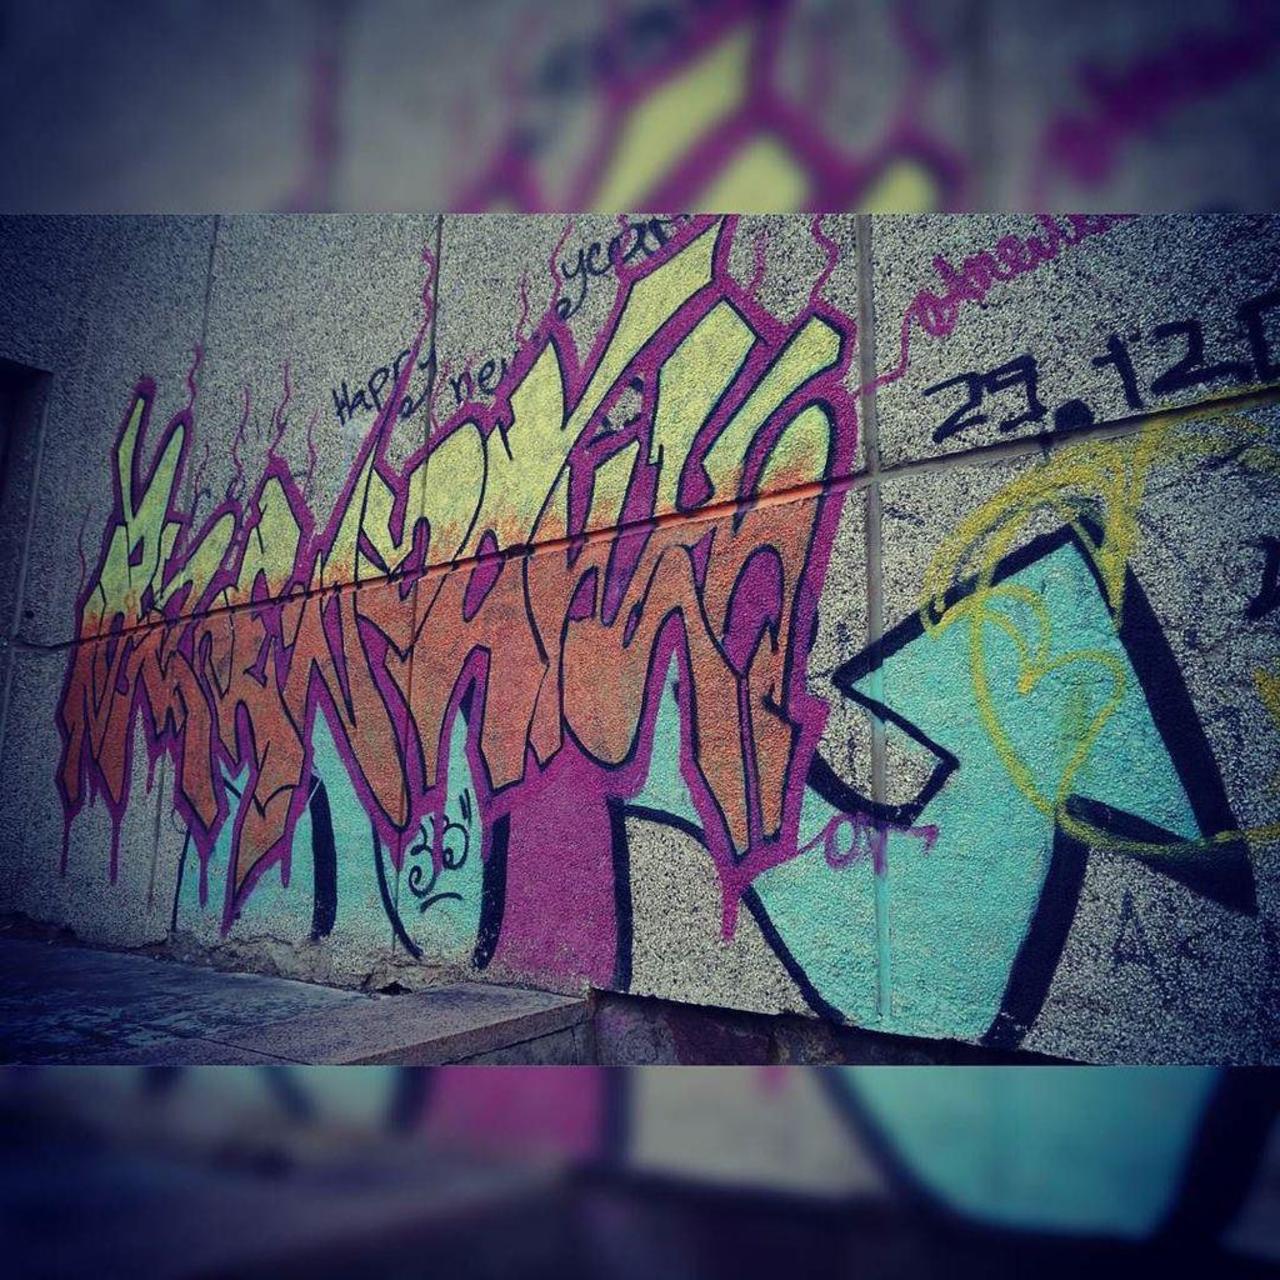 #граффити #графити #graffiti #art #grafitti #streetart #уличныйфотограф  #streetphotography #крск http://t.co/DPvCXiBORc